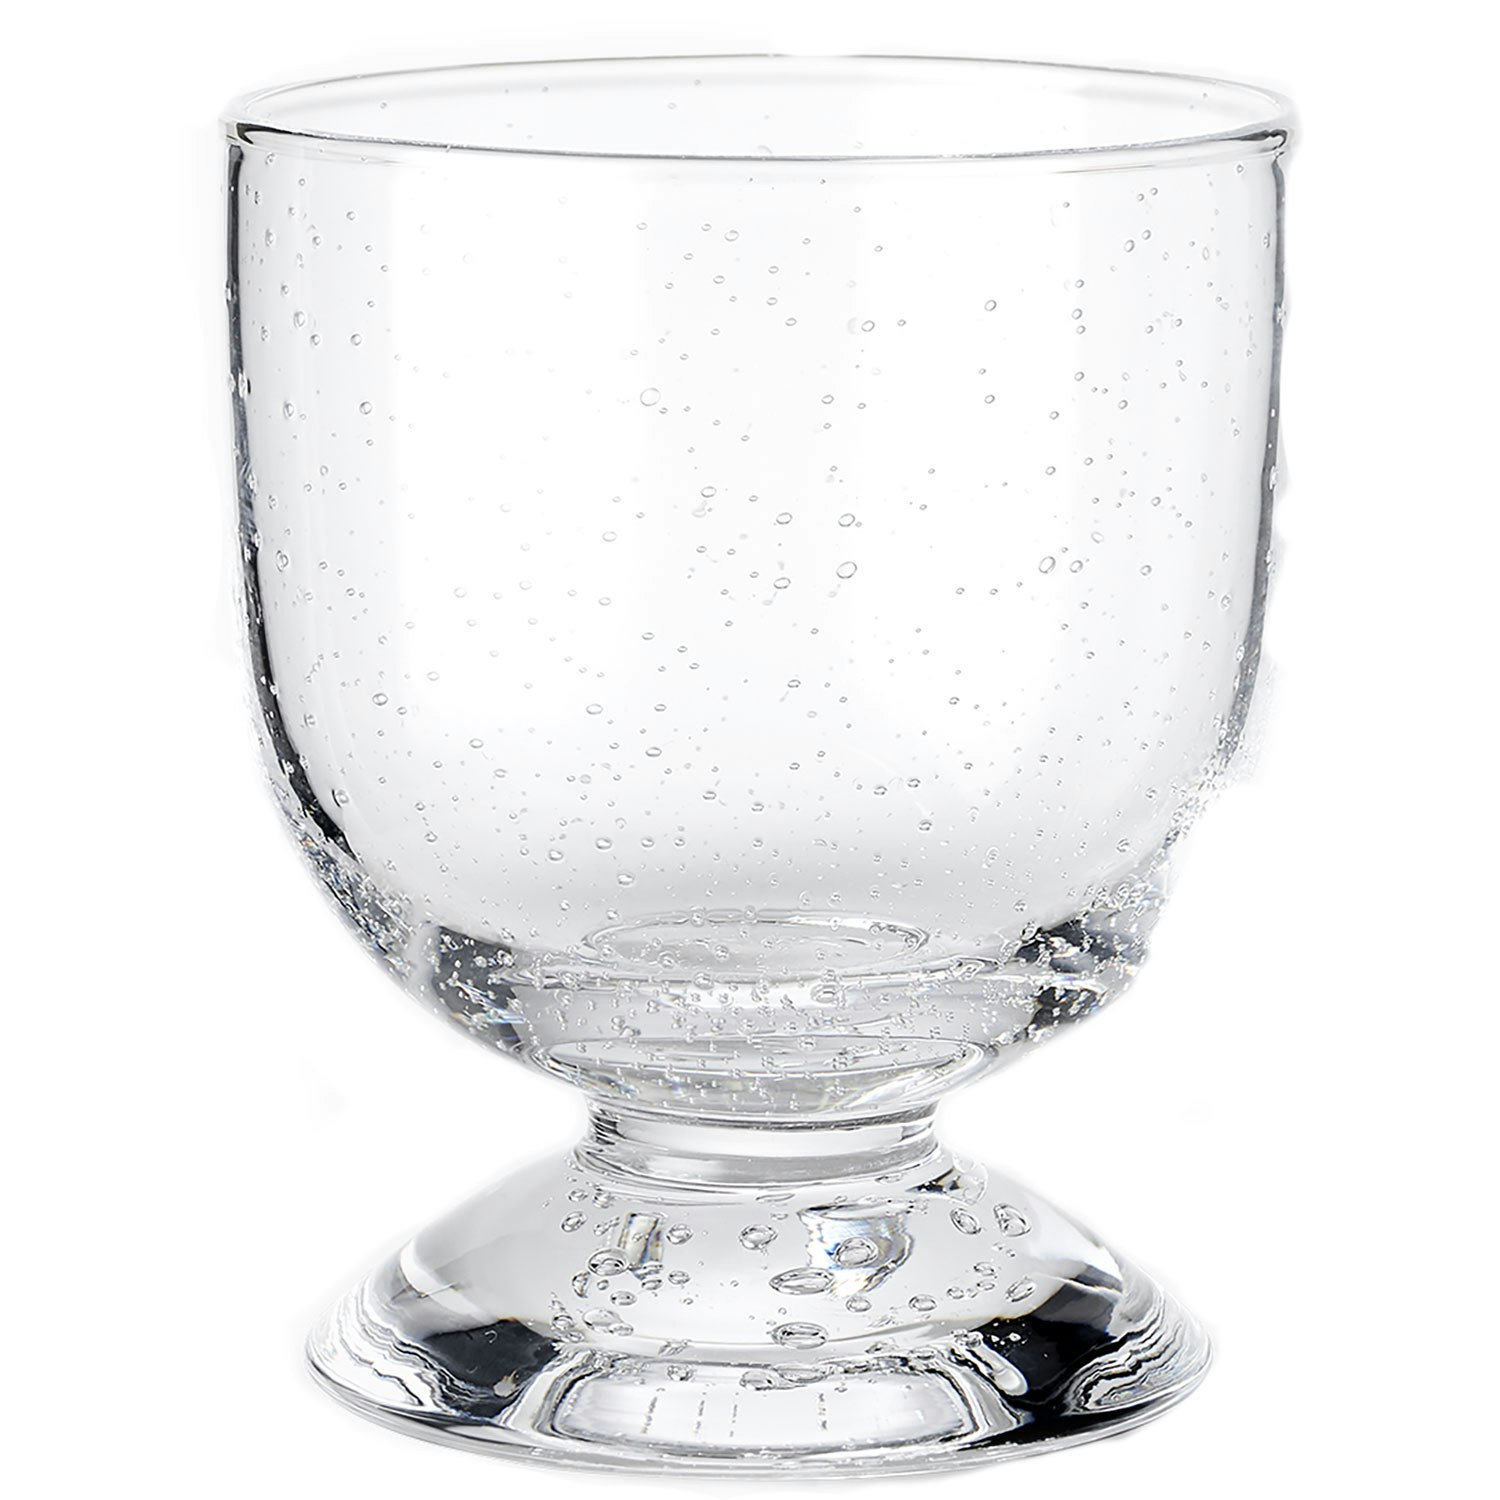 https://royaldesign.com/image/2/louise-roe-bubble-glass-water-low-0